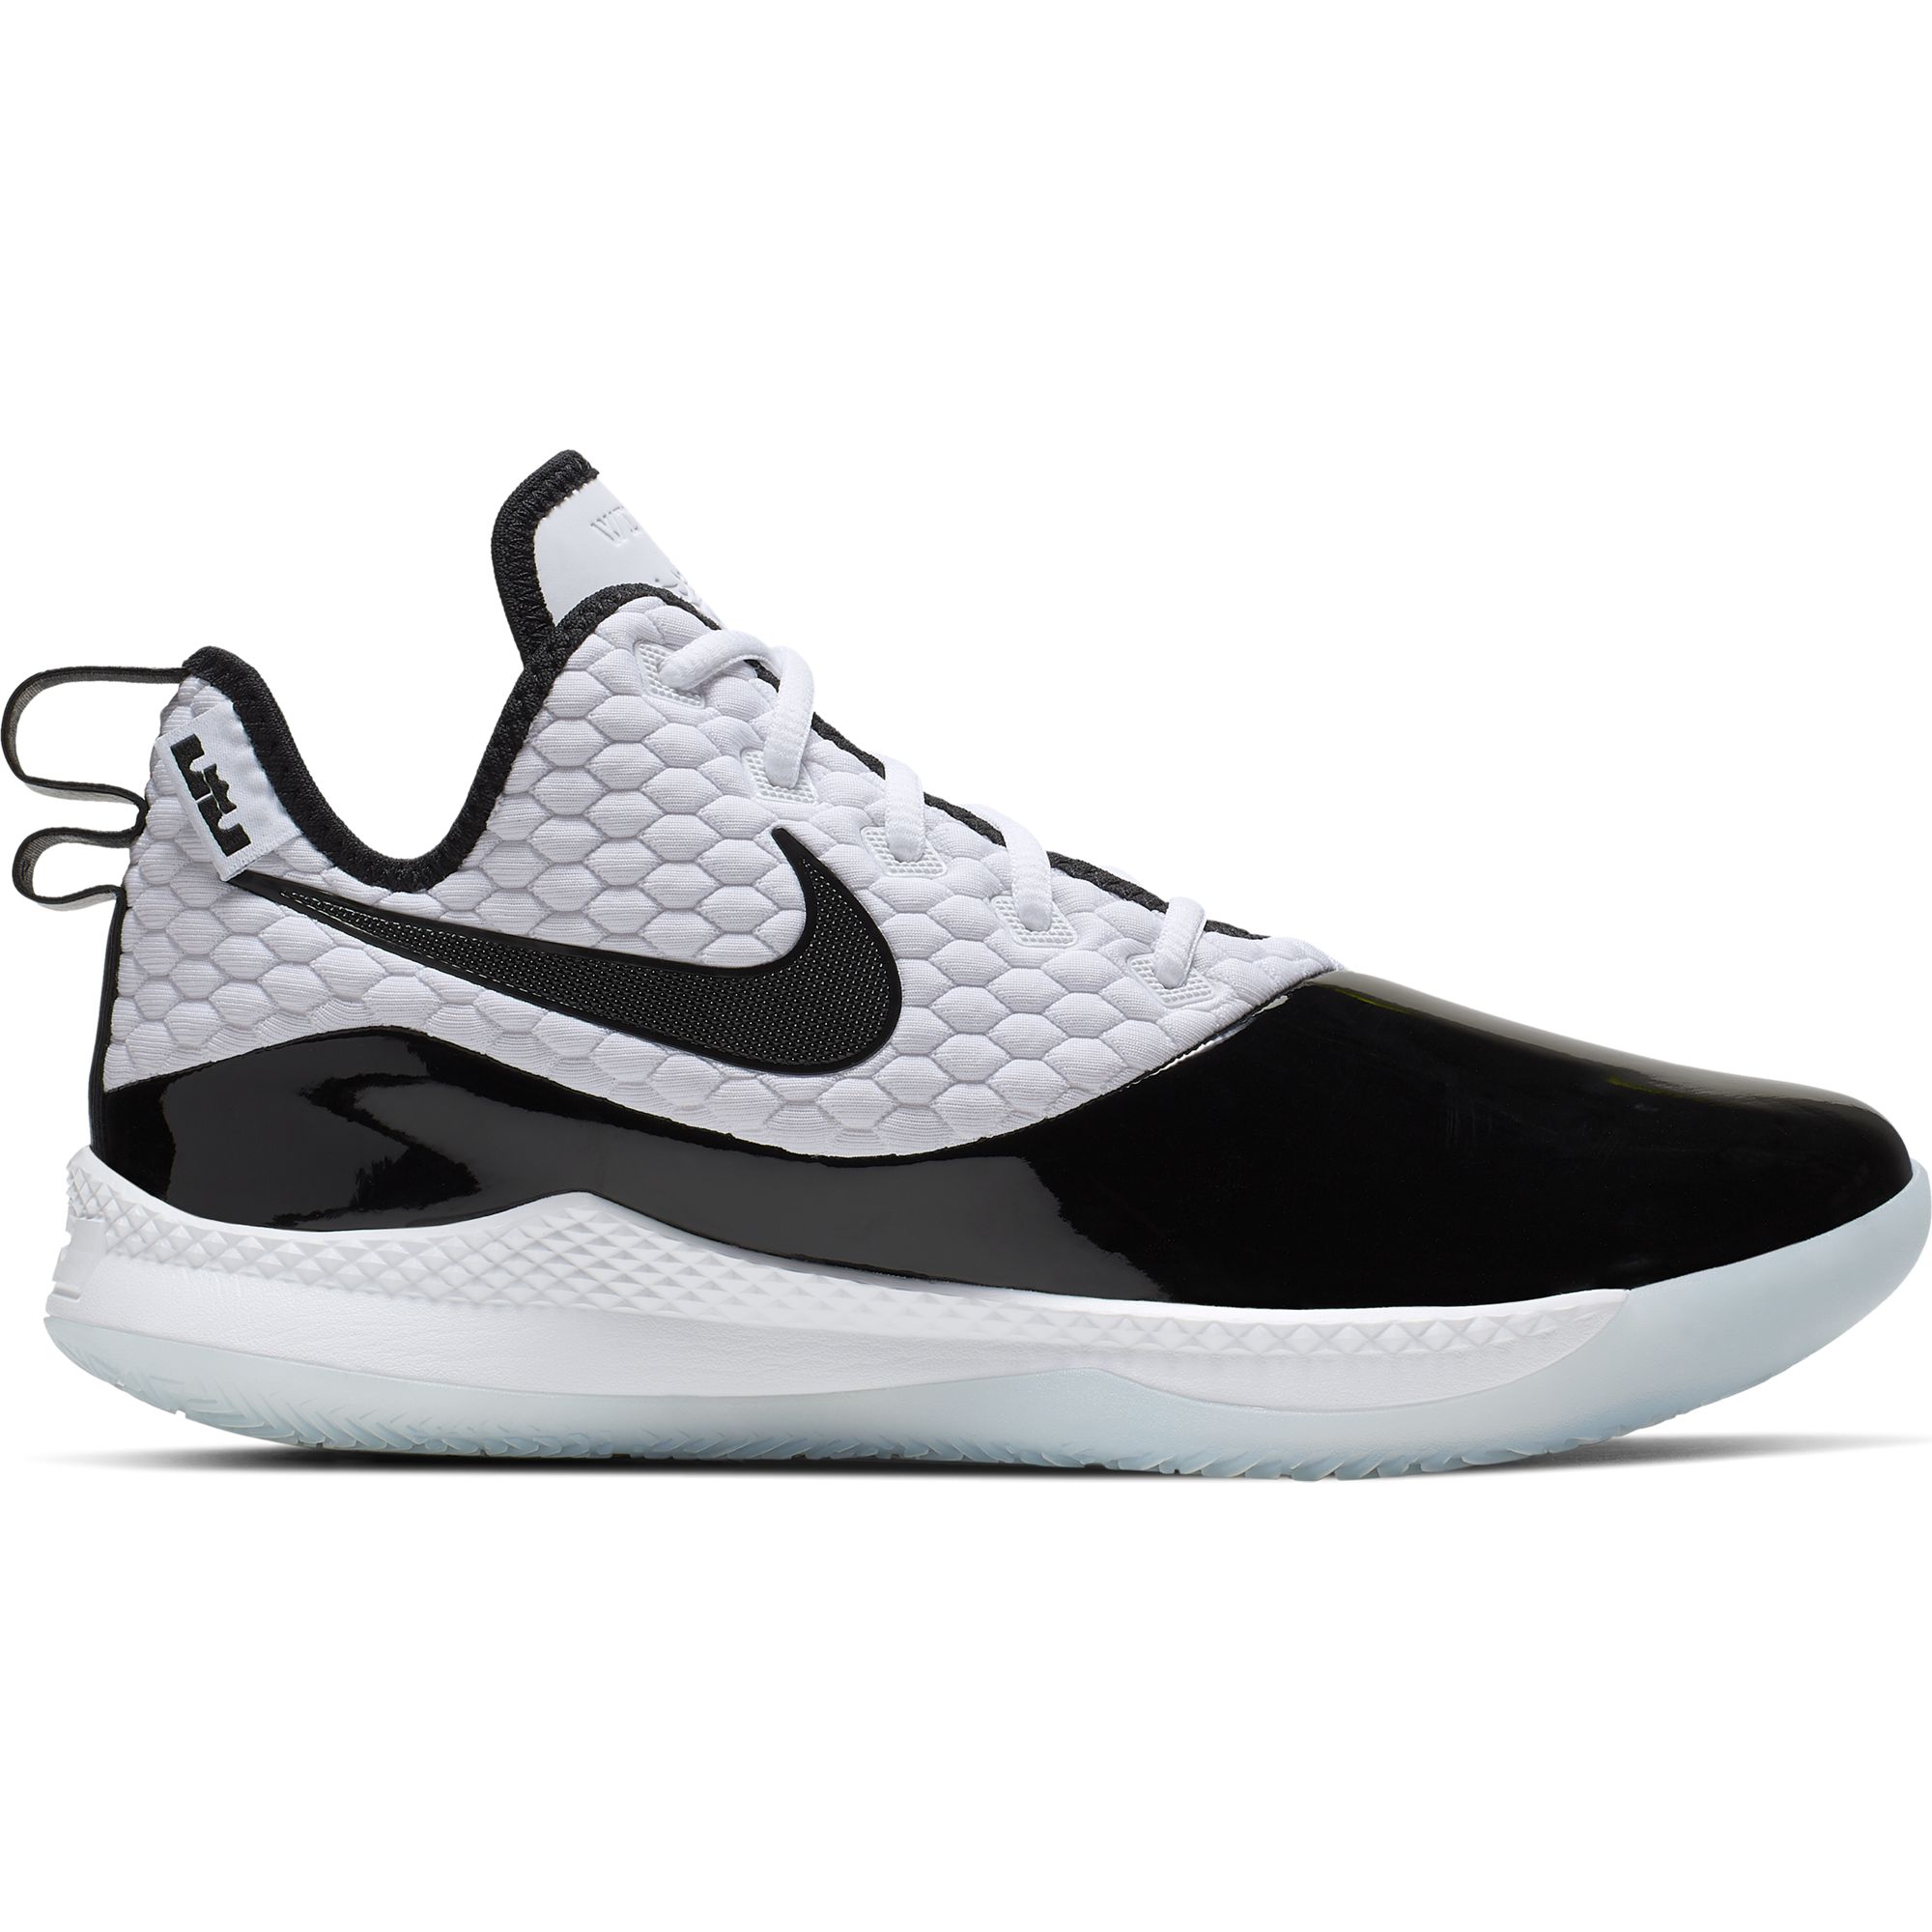 Men's Nike LeBron Witness III PRM Basketball Shoe White/Black/Half Blue - image 1 of 6